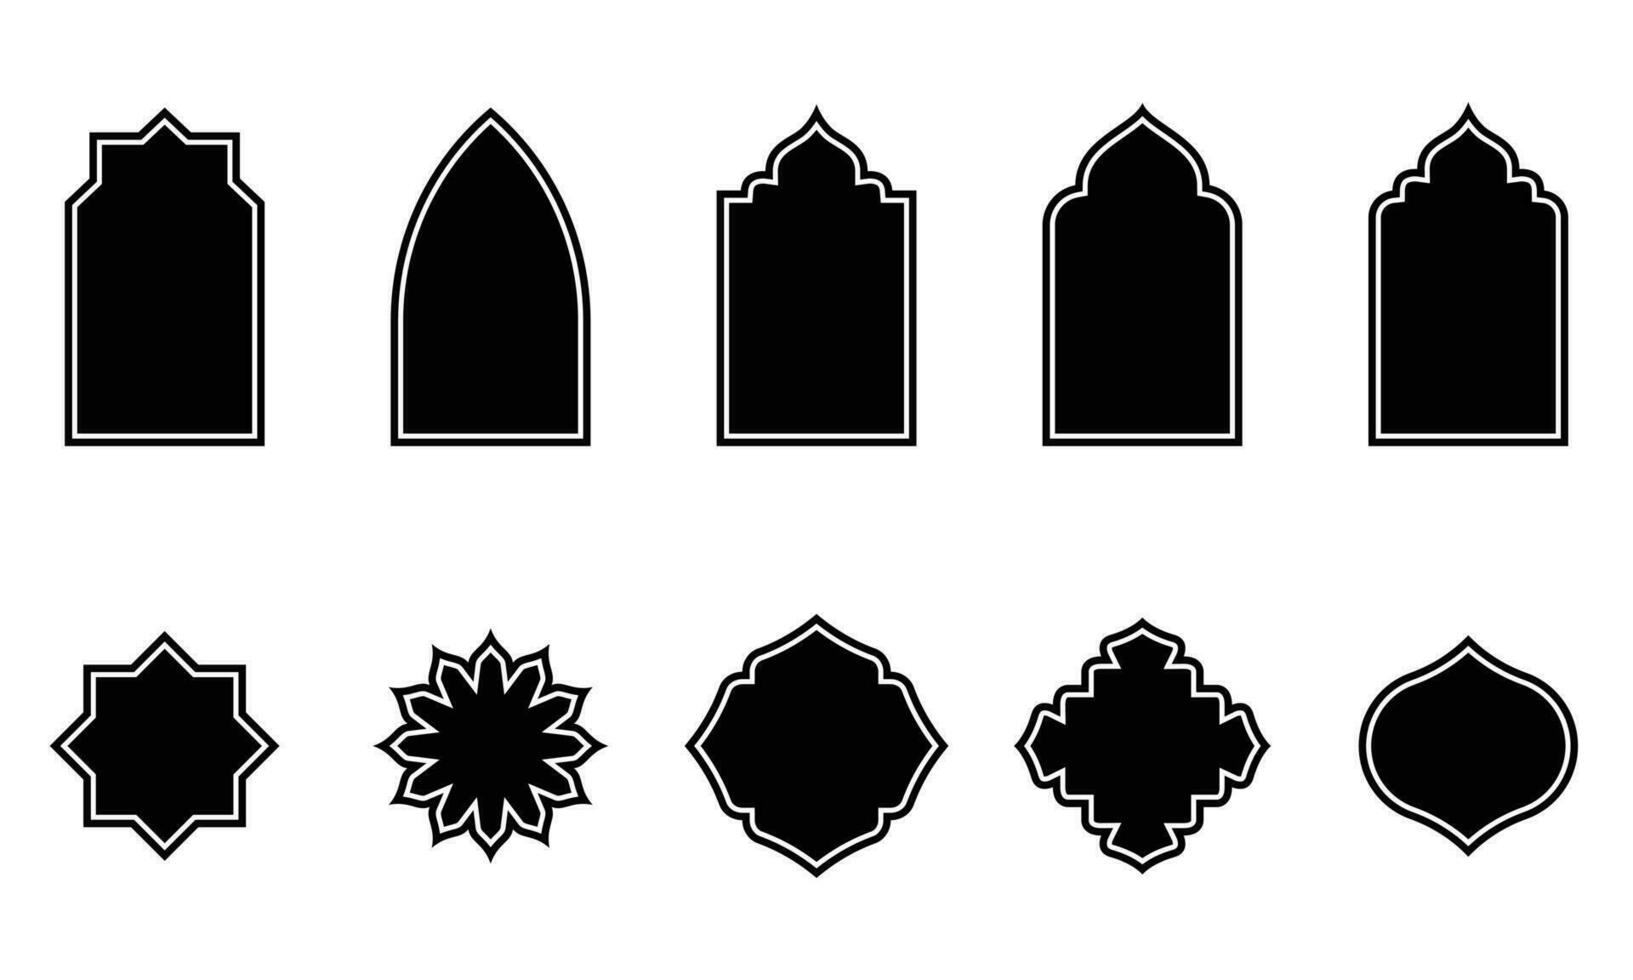 conjunto do islâmico forma ilustração. plano islâmico porta e árabe janela forma ilustração. muçulmano oriental formas Projeto para Ramadã. Boa para islâmico projeto, rótulo, sinal, adesivo vetor